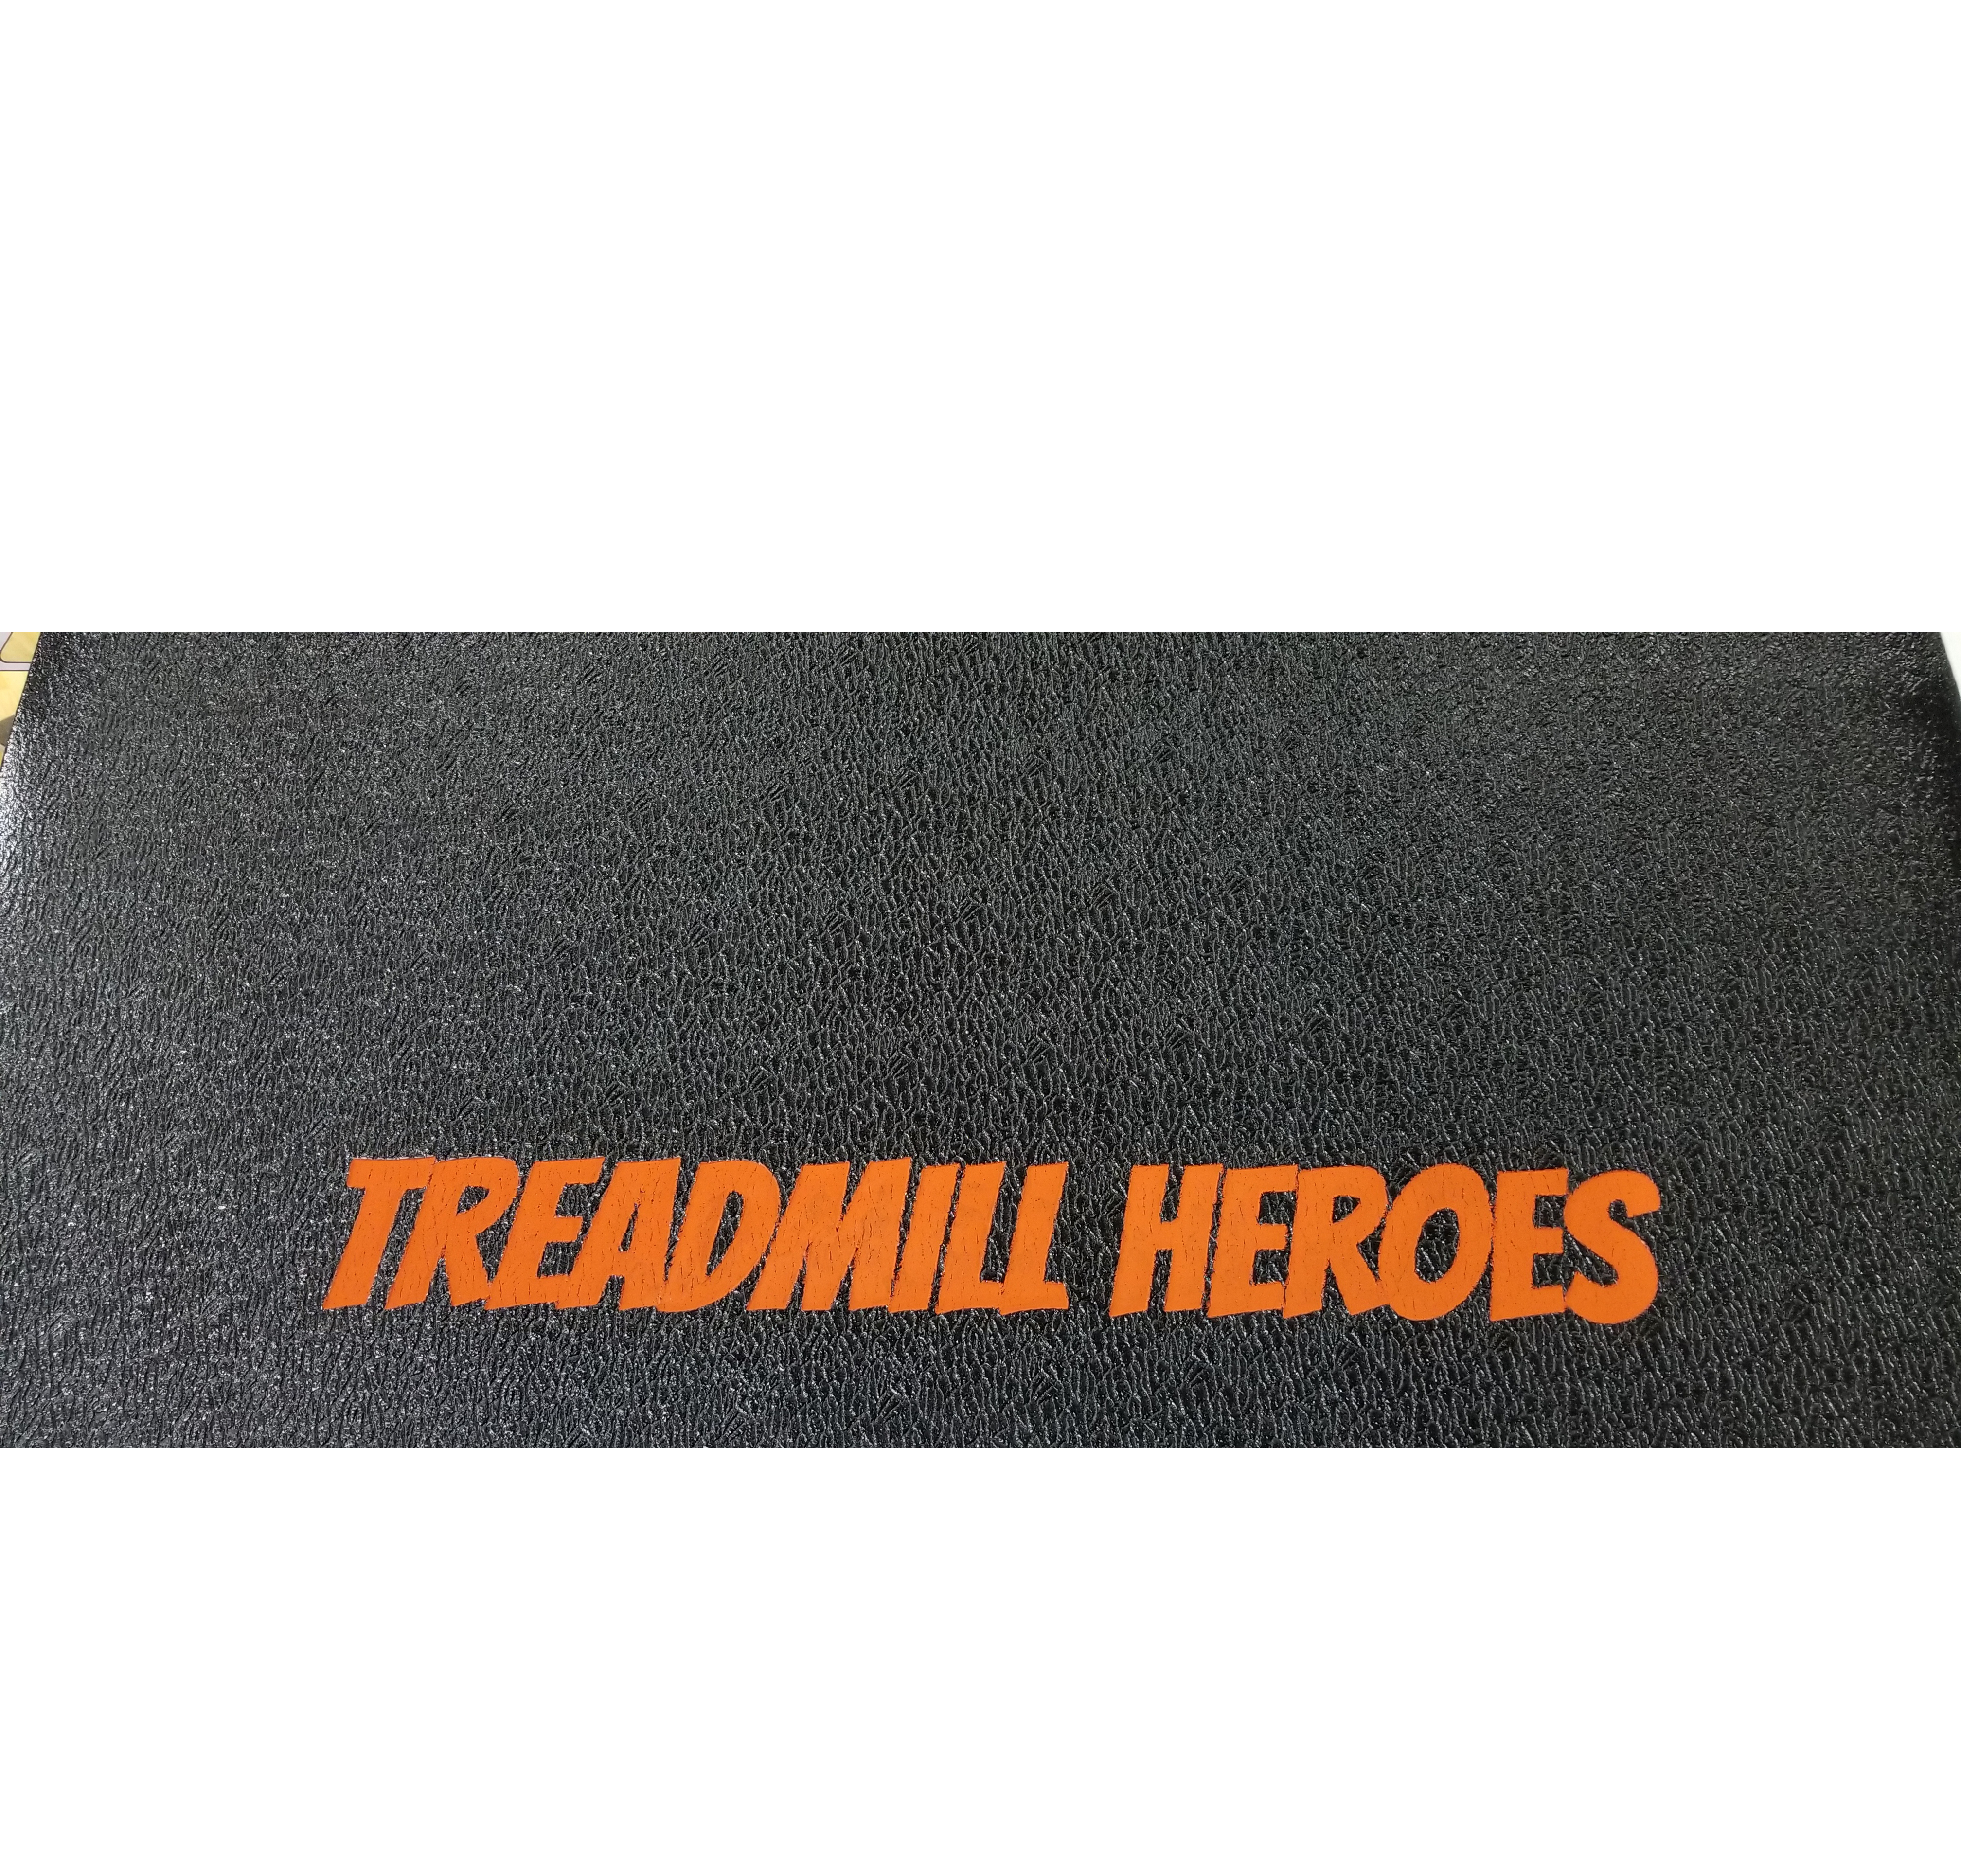 Treadmill Heroes equipment mat